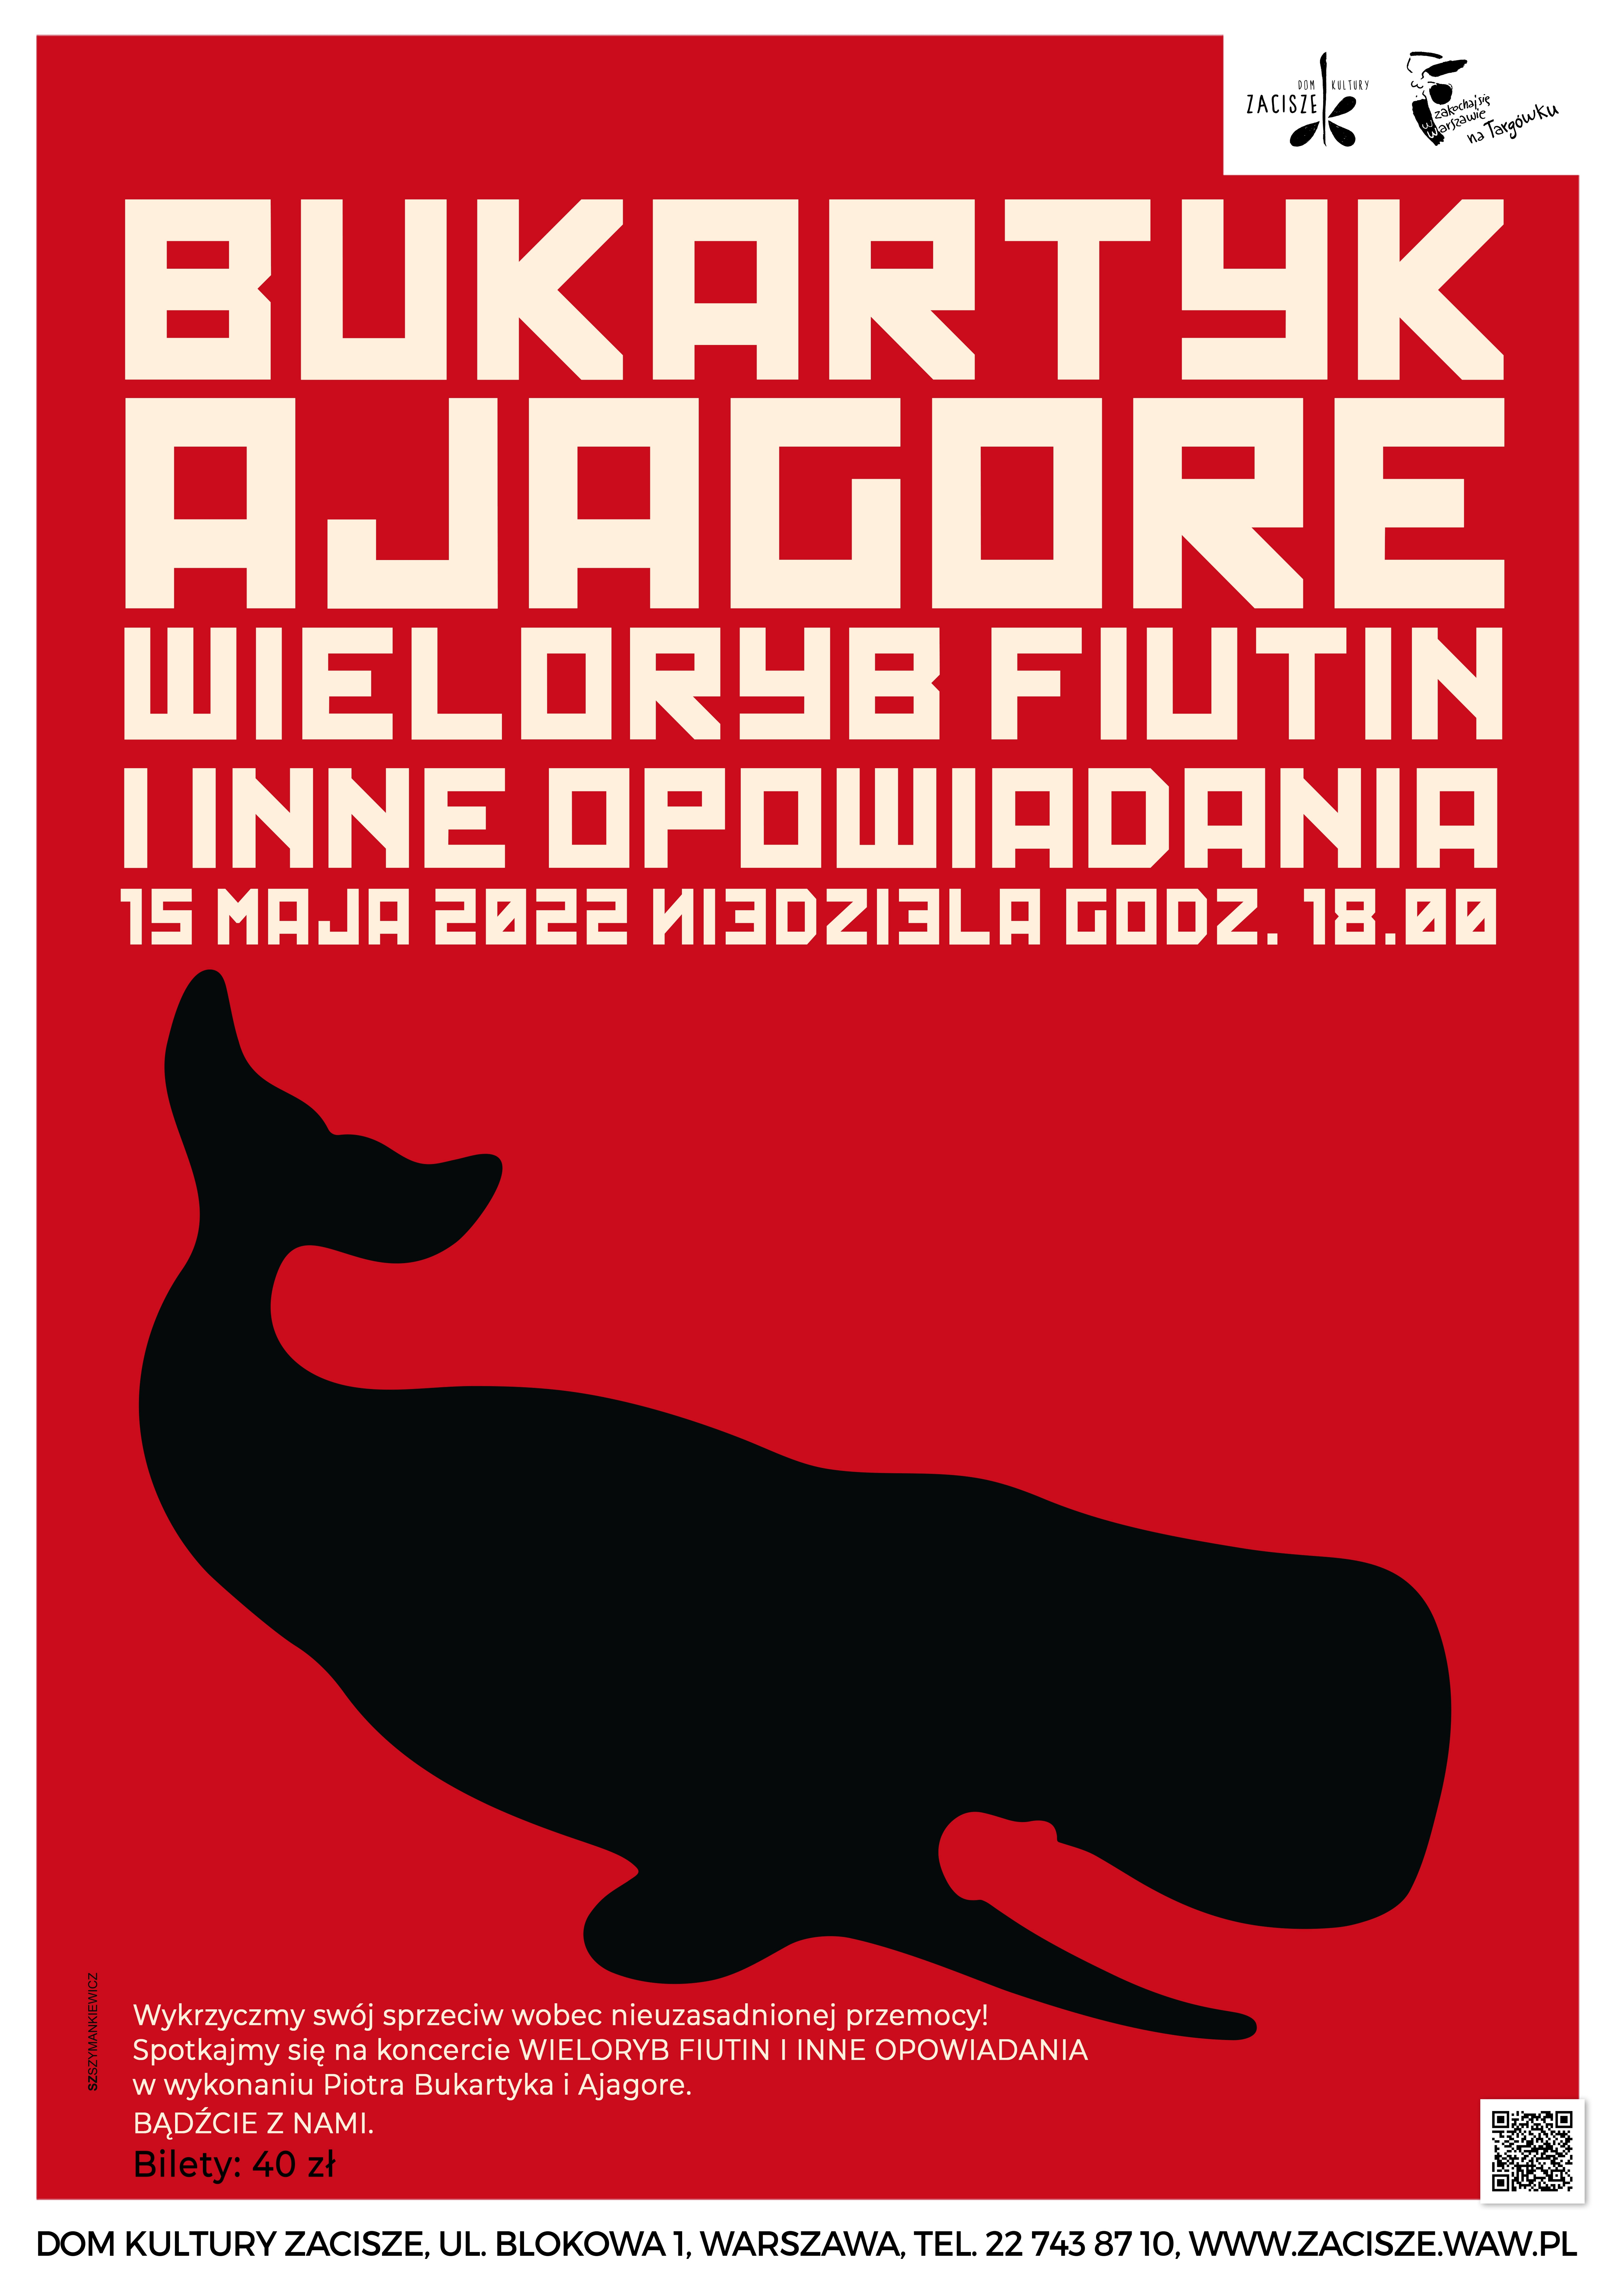 Plakat Projekt Bukartyk/AJAGORE - Wieloryb Fiutin i inne opowiadania 63926